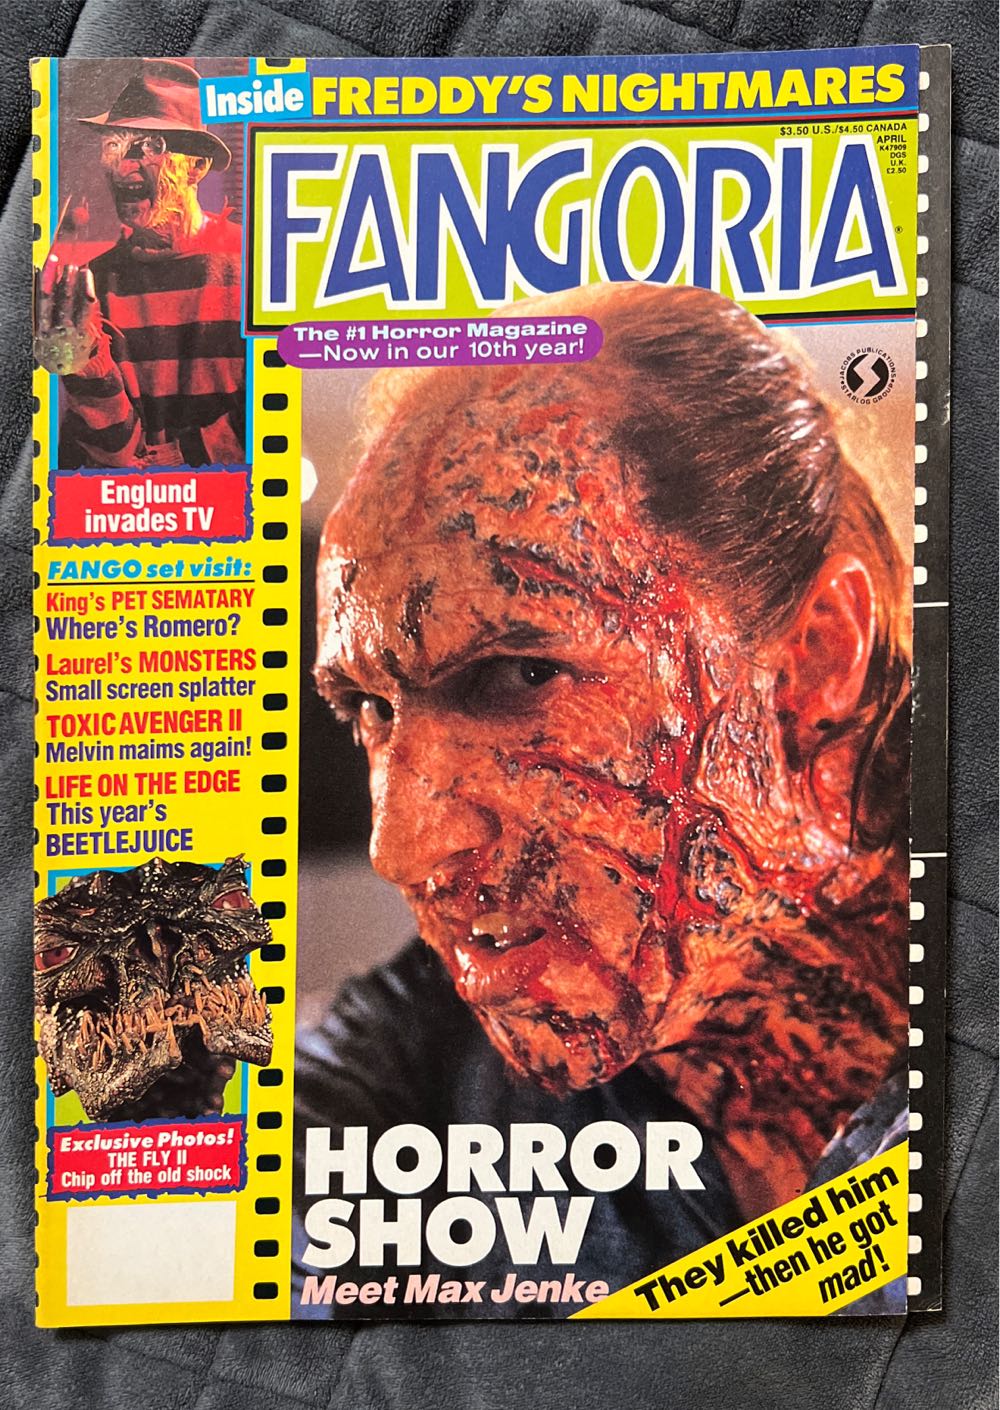 Fangoria #81  magazine collectible - Main Image 1